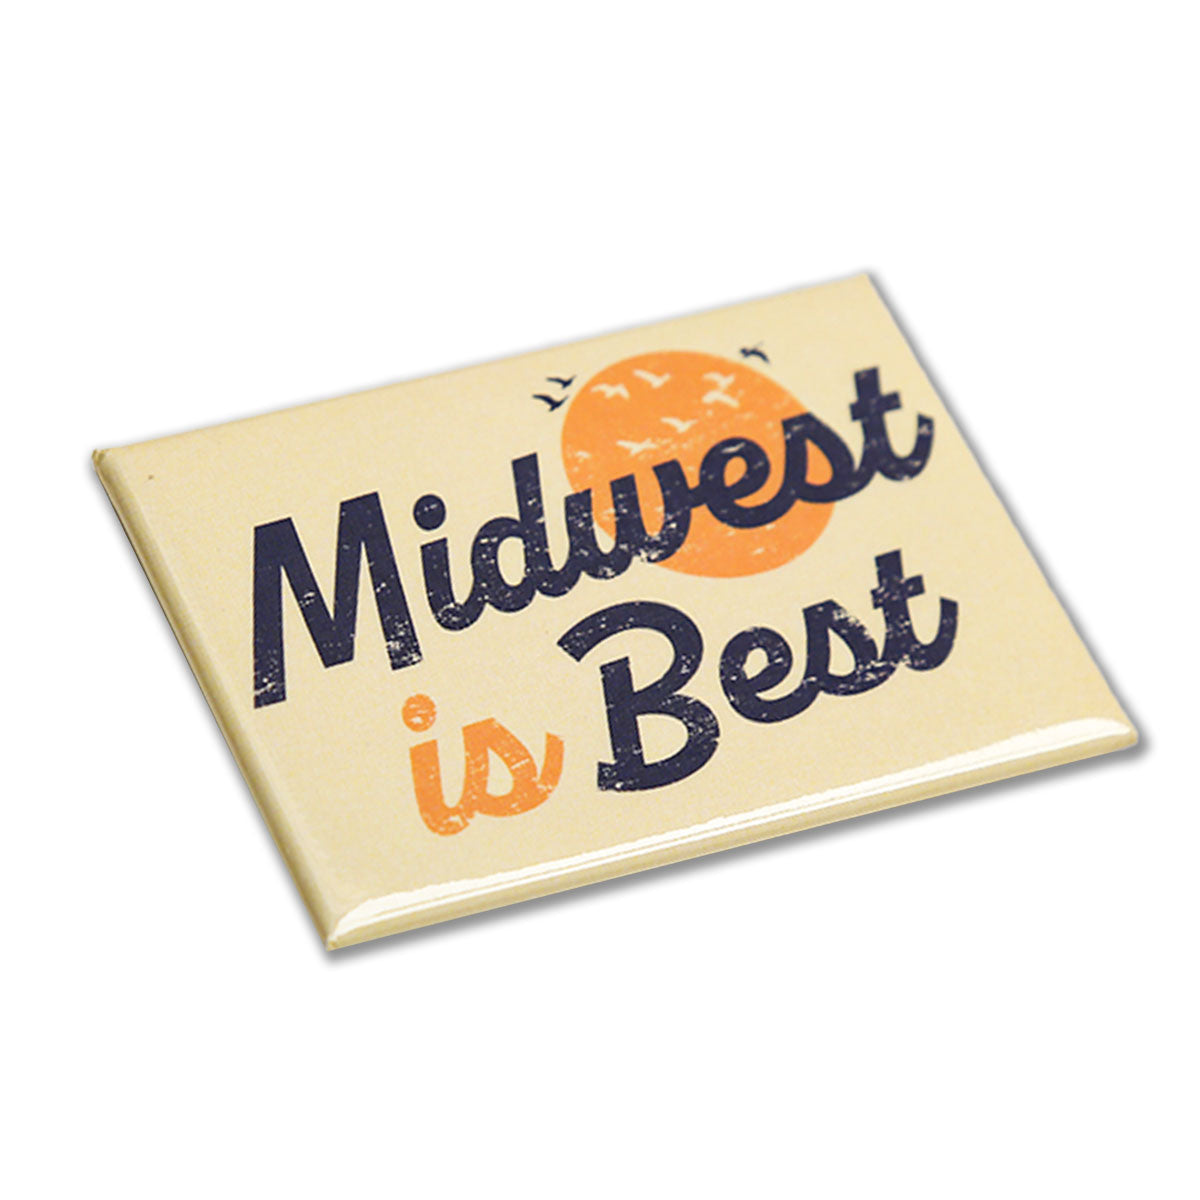 Midwest is Best - Bozz Prints